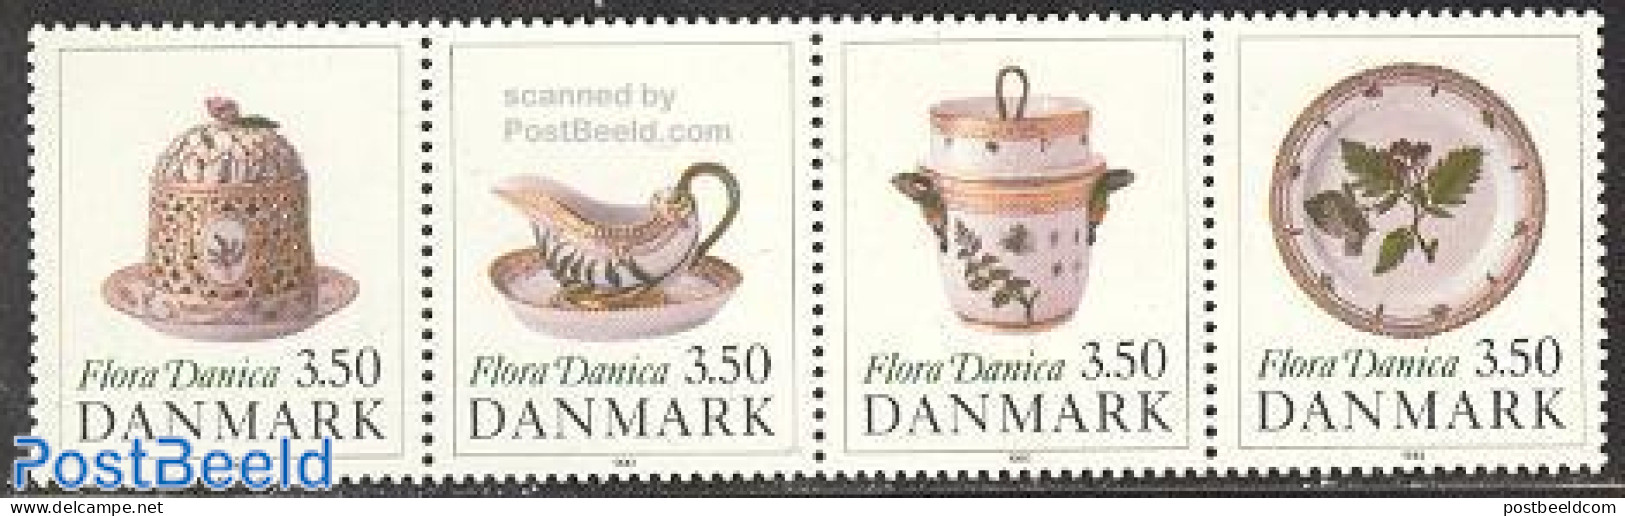 Denmark 1990 Porcelain 4v [:::], Mint NH, Art - Art & Antique Objects - Ceramics - Ungebraucht